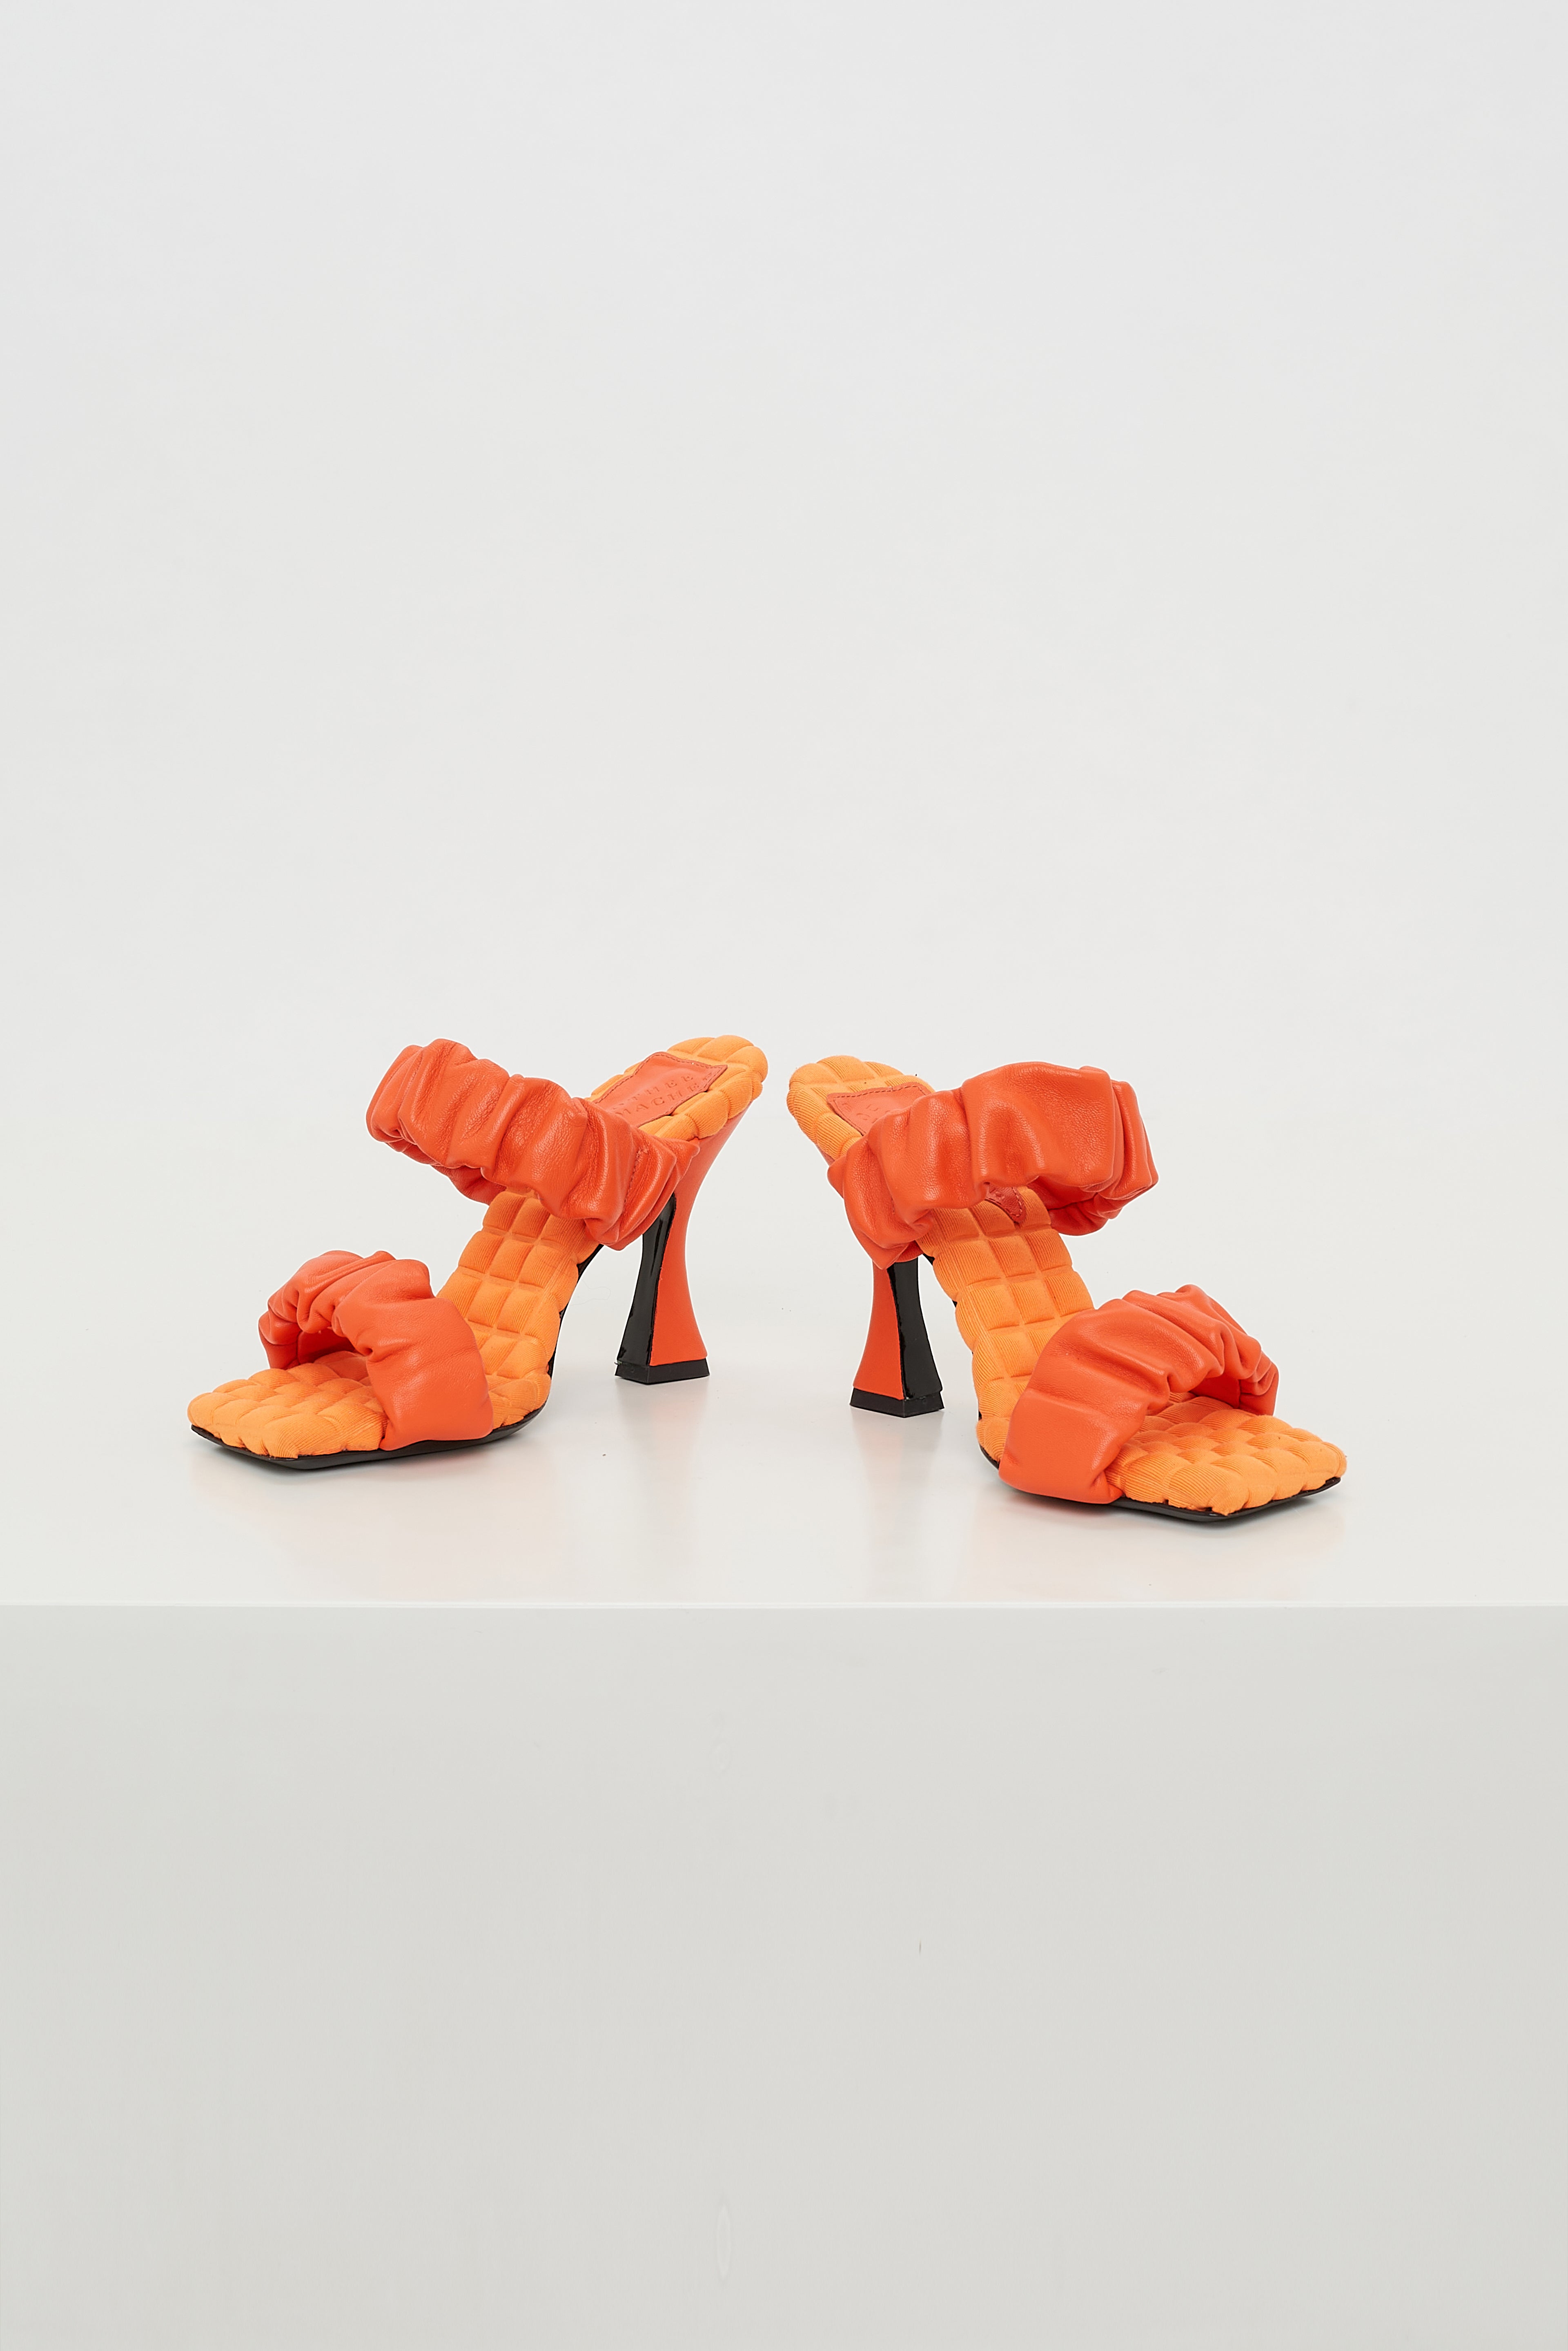 Dorothee-Schumacher-OUTLET-SALE-SPORTY-FEMININITY-sandal-heeled-Sandalen-ARCHIVE-COLLECTION-4.jpg